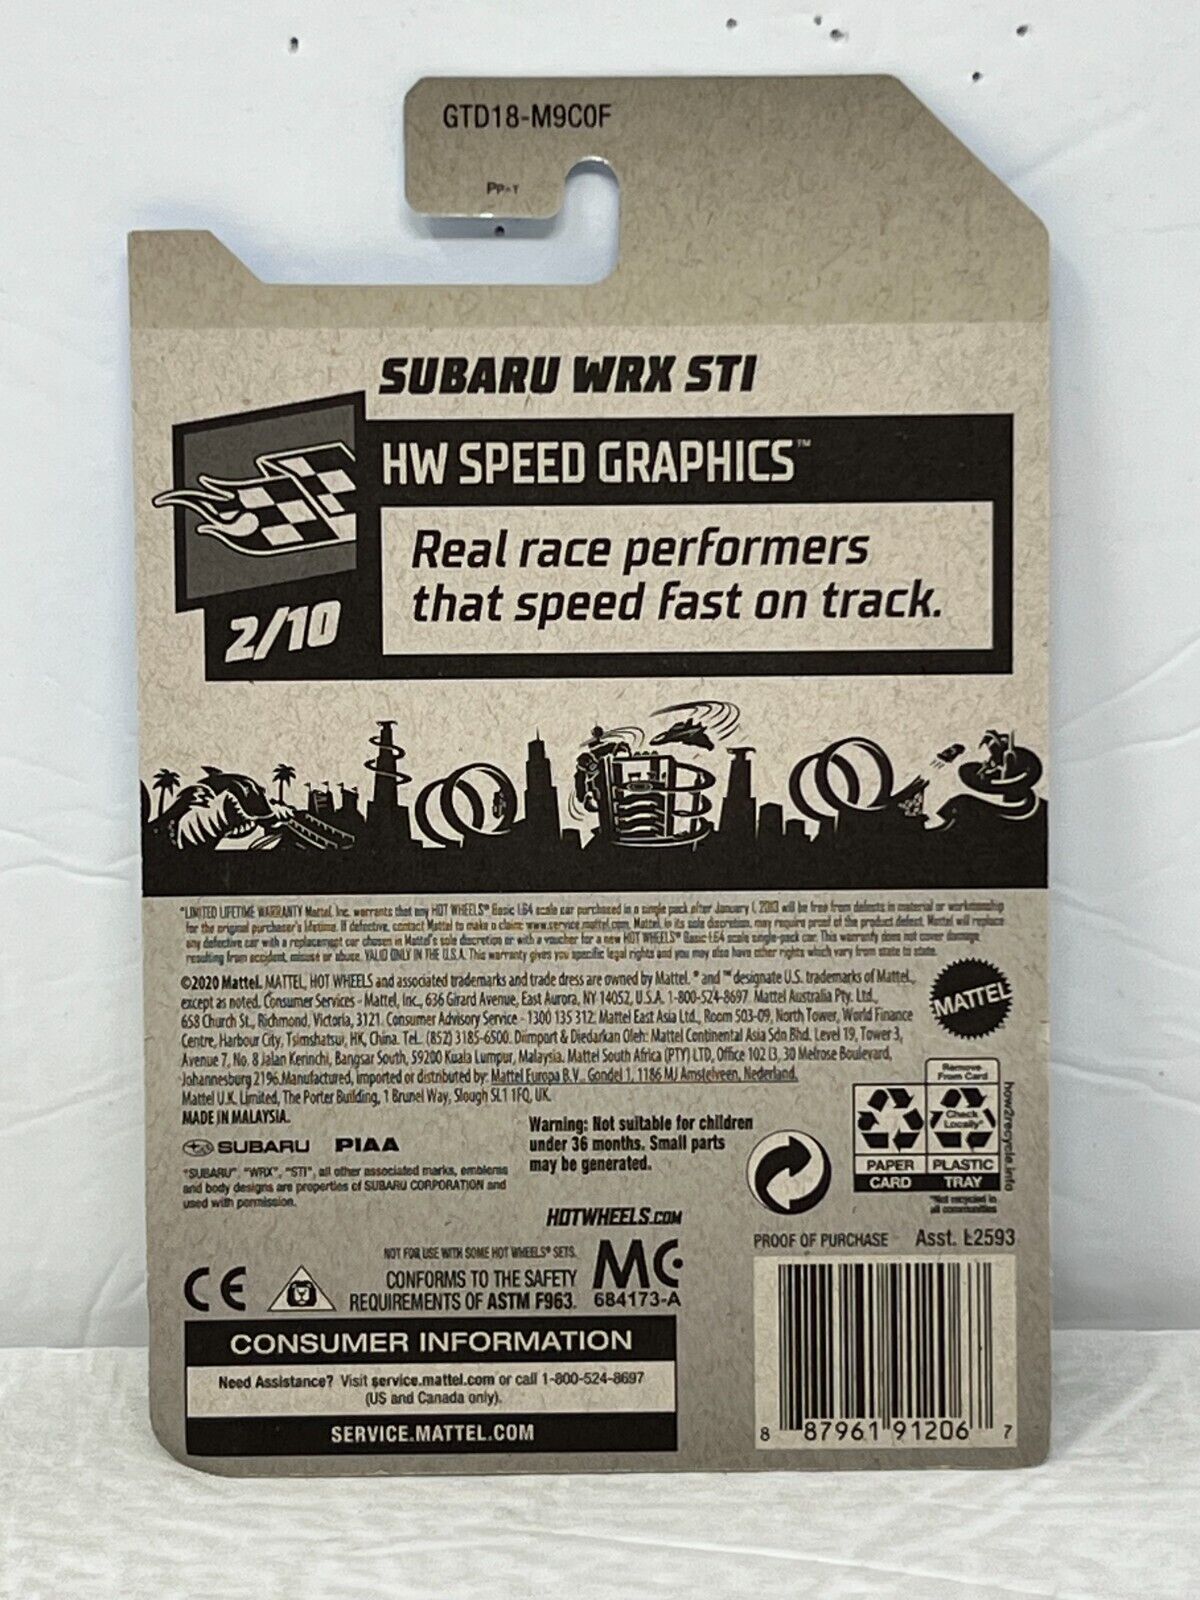 Hot Wheels Zamac HW Speed Graphics Subaru WRX STi 1:64 Diecast